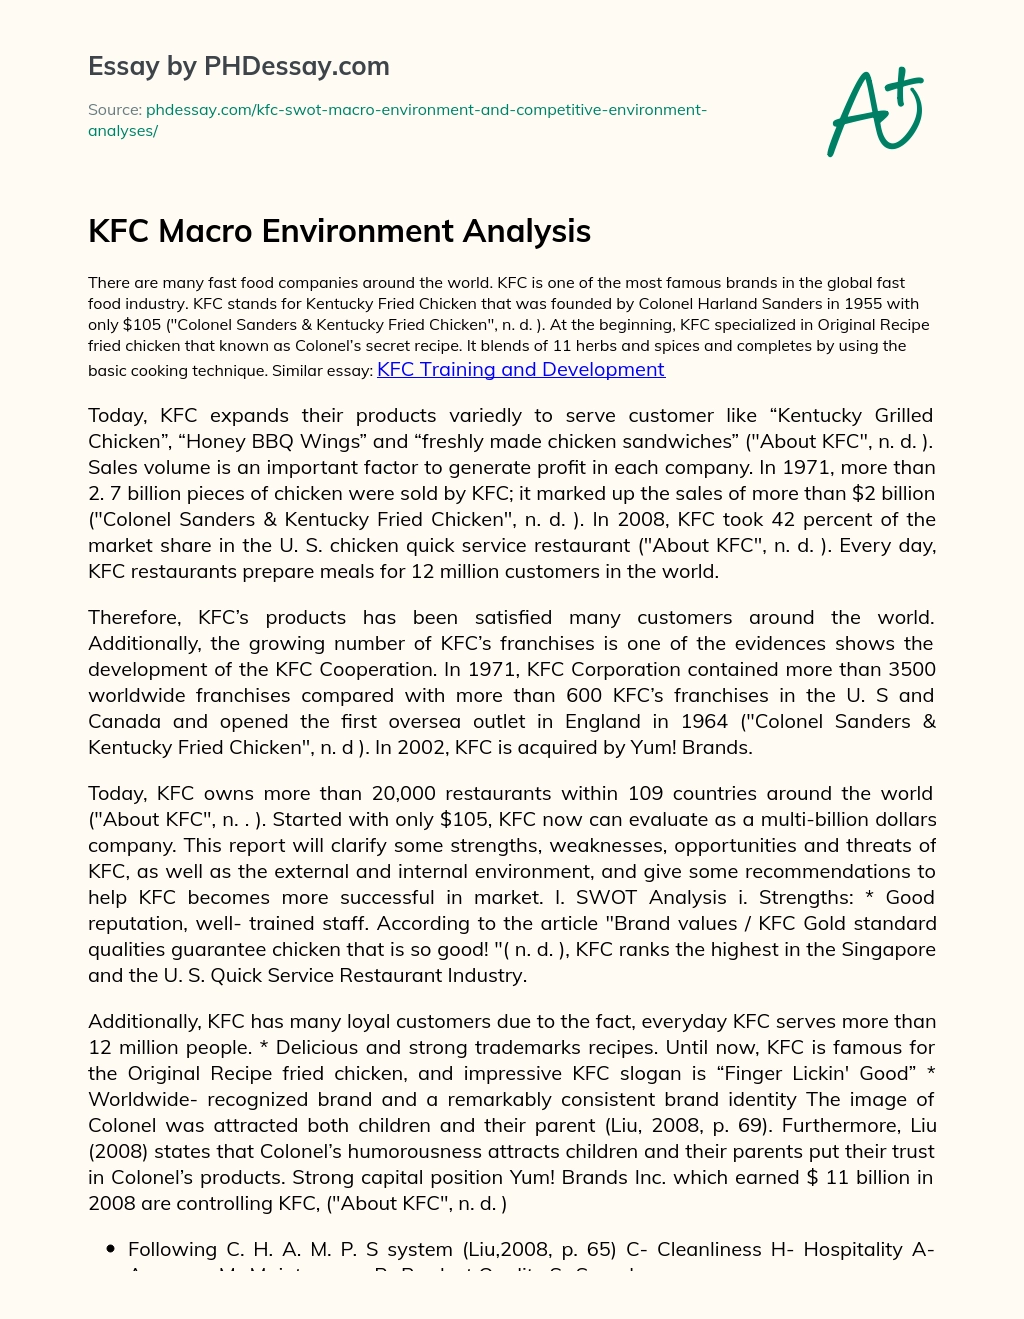 KFC Macro Environment Analysis essay